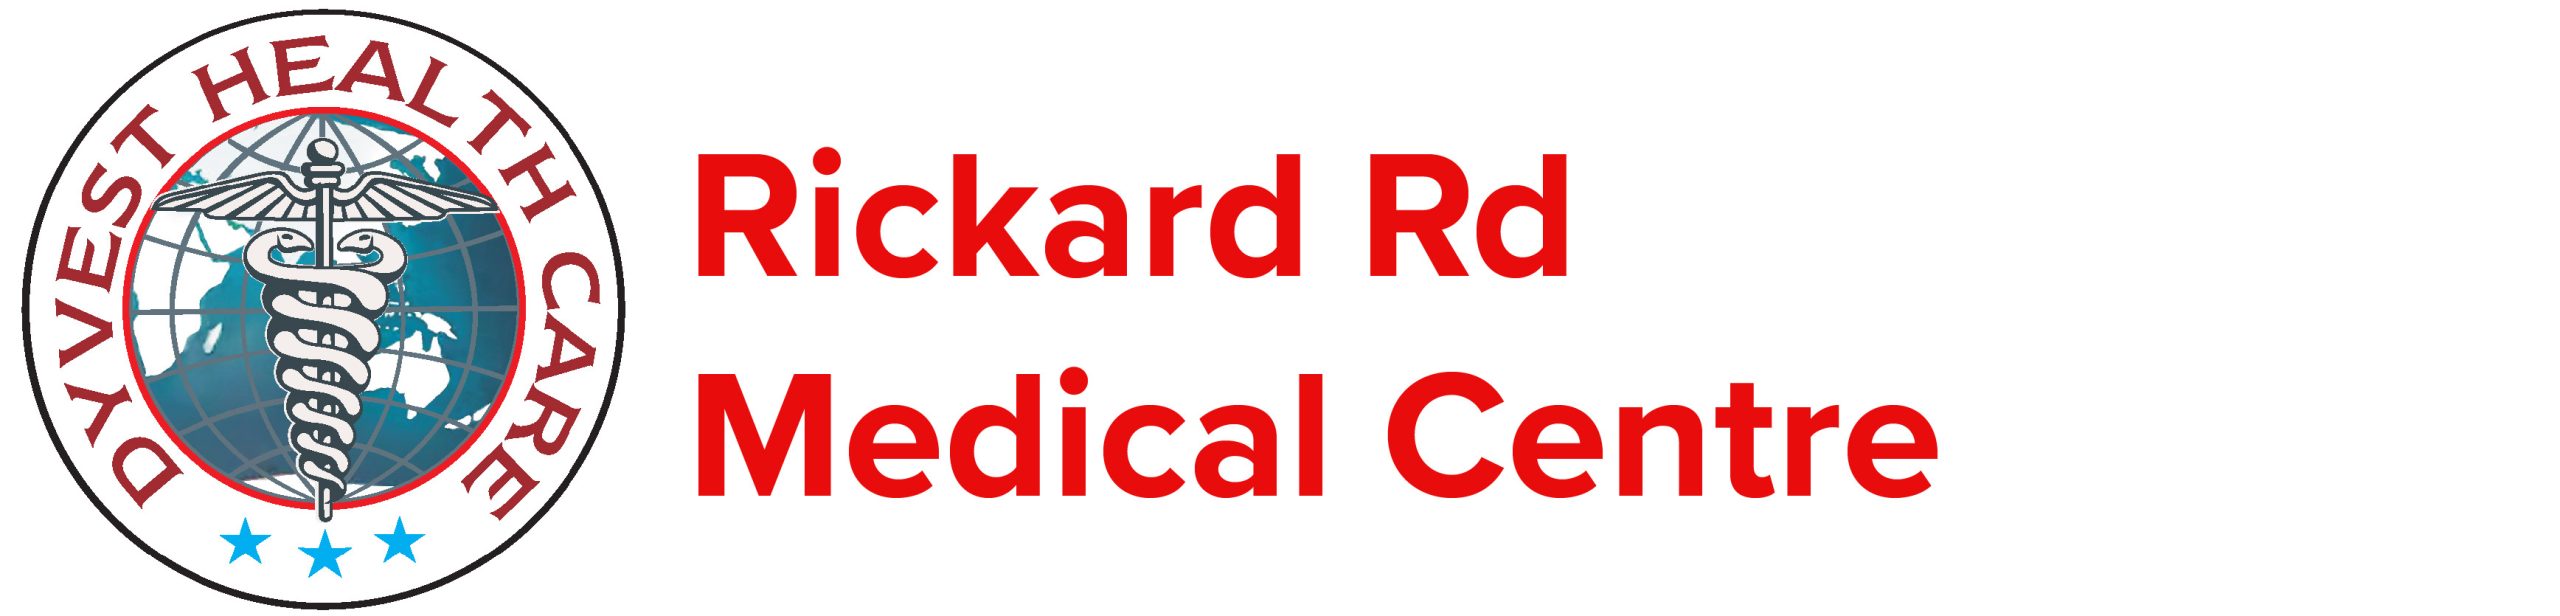 Rickard Rd Medical Centre Logo